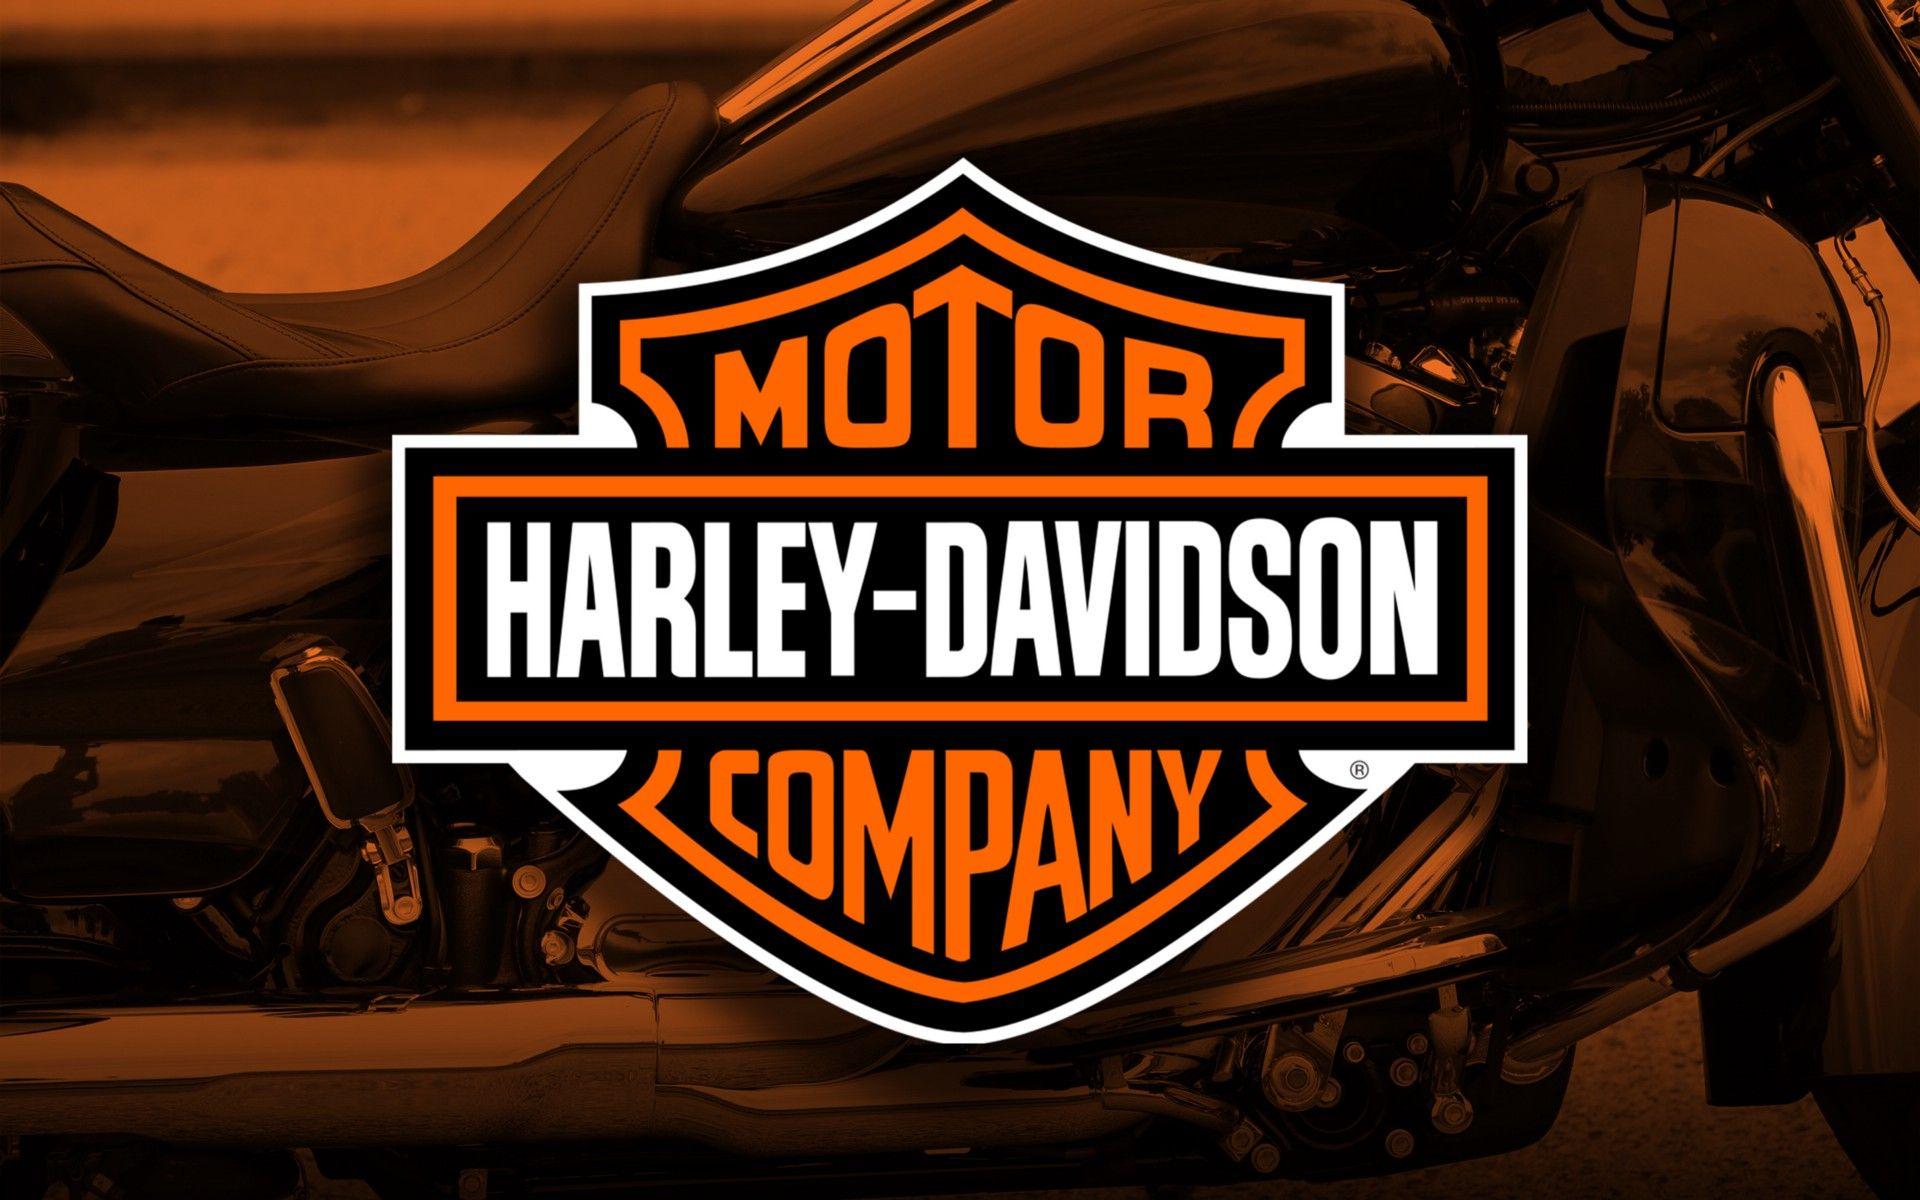 Harley Davidson Football Logo - Keep your motor running: The Harley Davidson brand story…